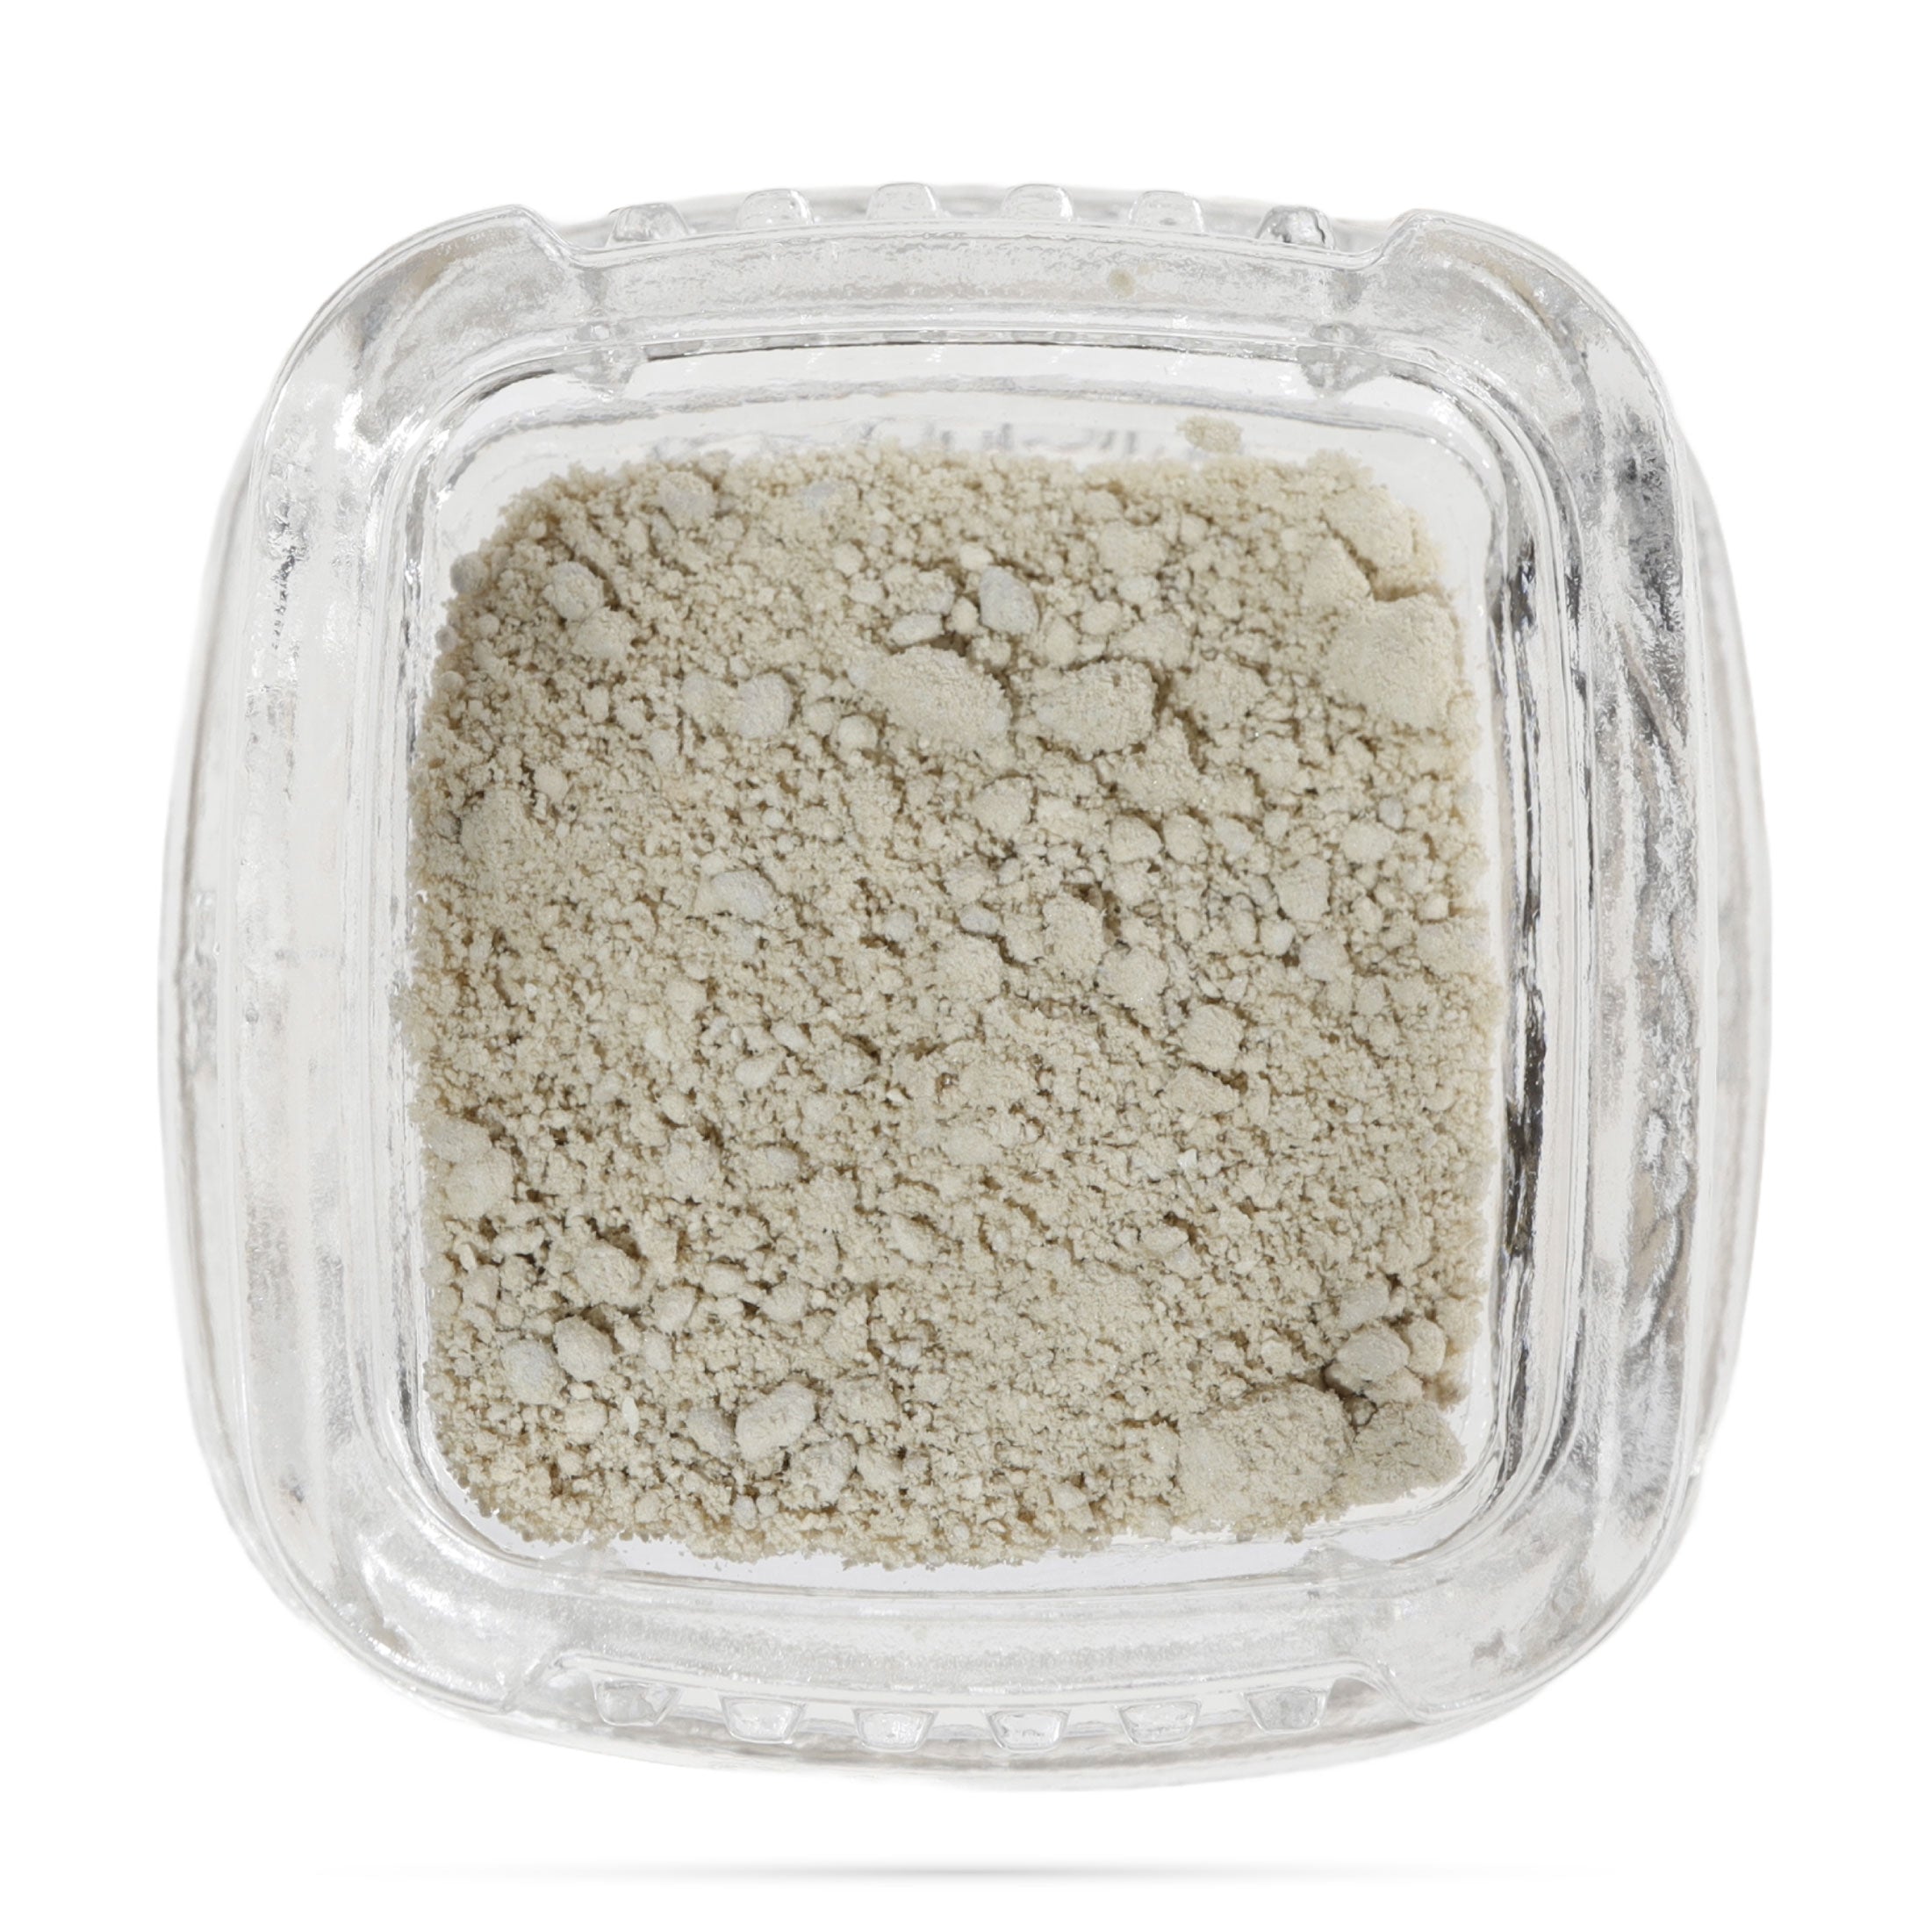 Image CBGa Isolate  powder in a jar.